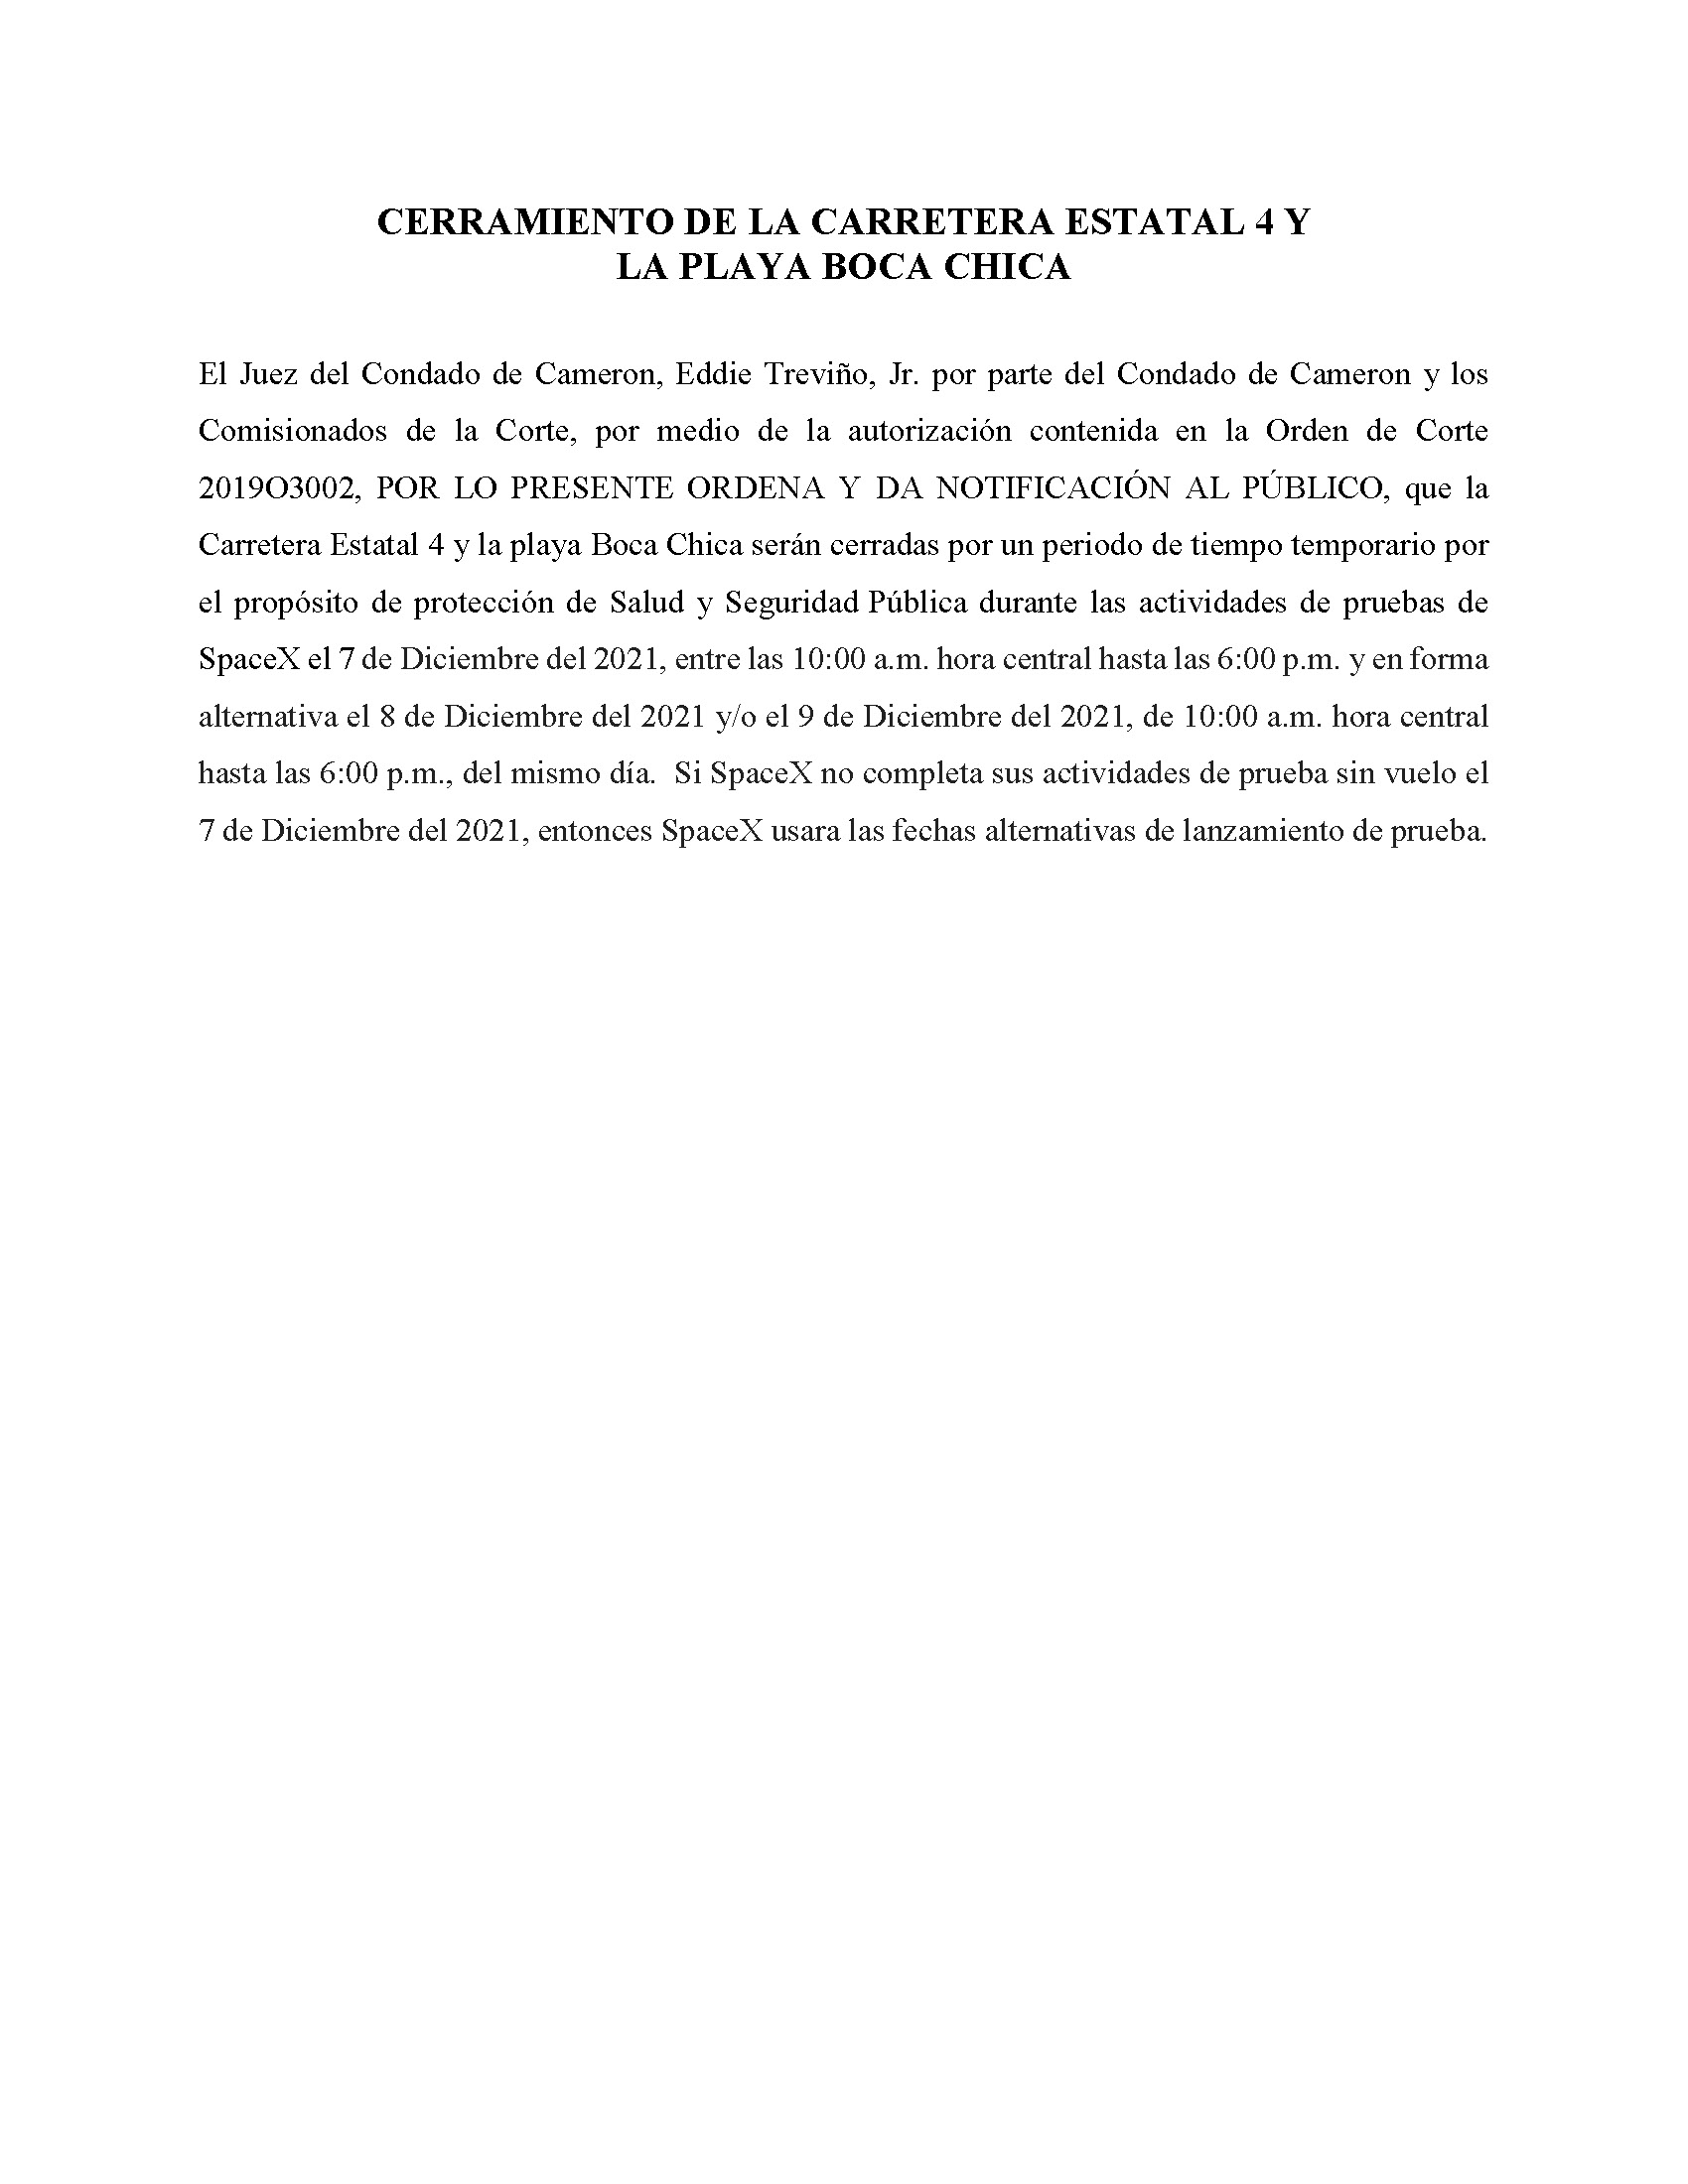 ORDER.CLOSURE OF HIGHWAY 4 Y LA PLAYA BOCA CHICA.SPANISH.12.07.2021